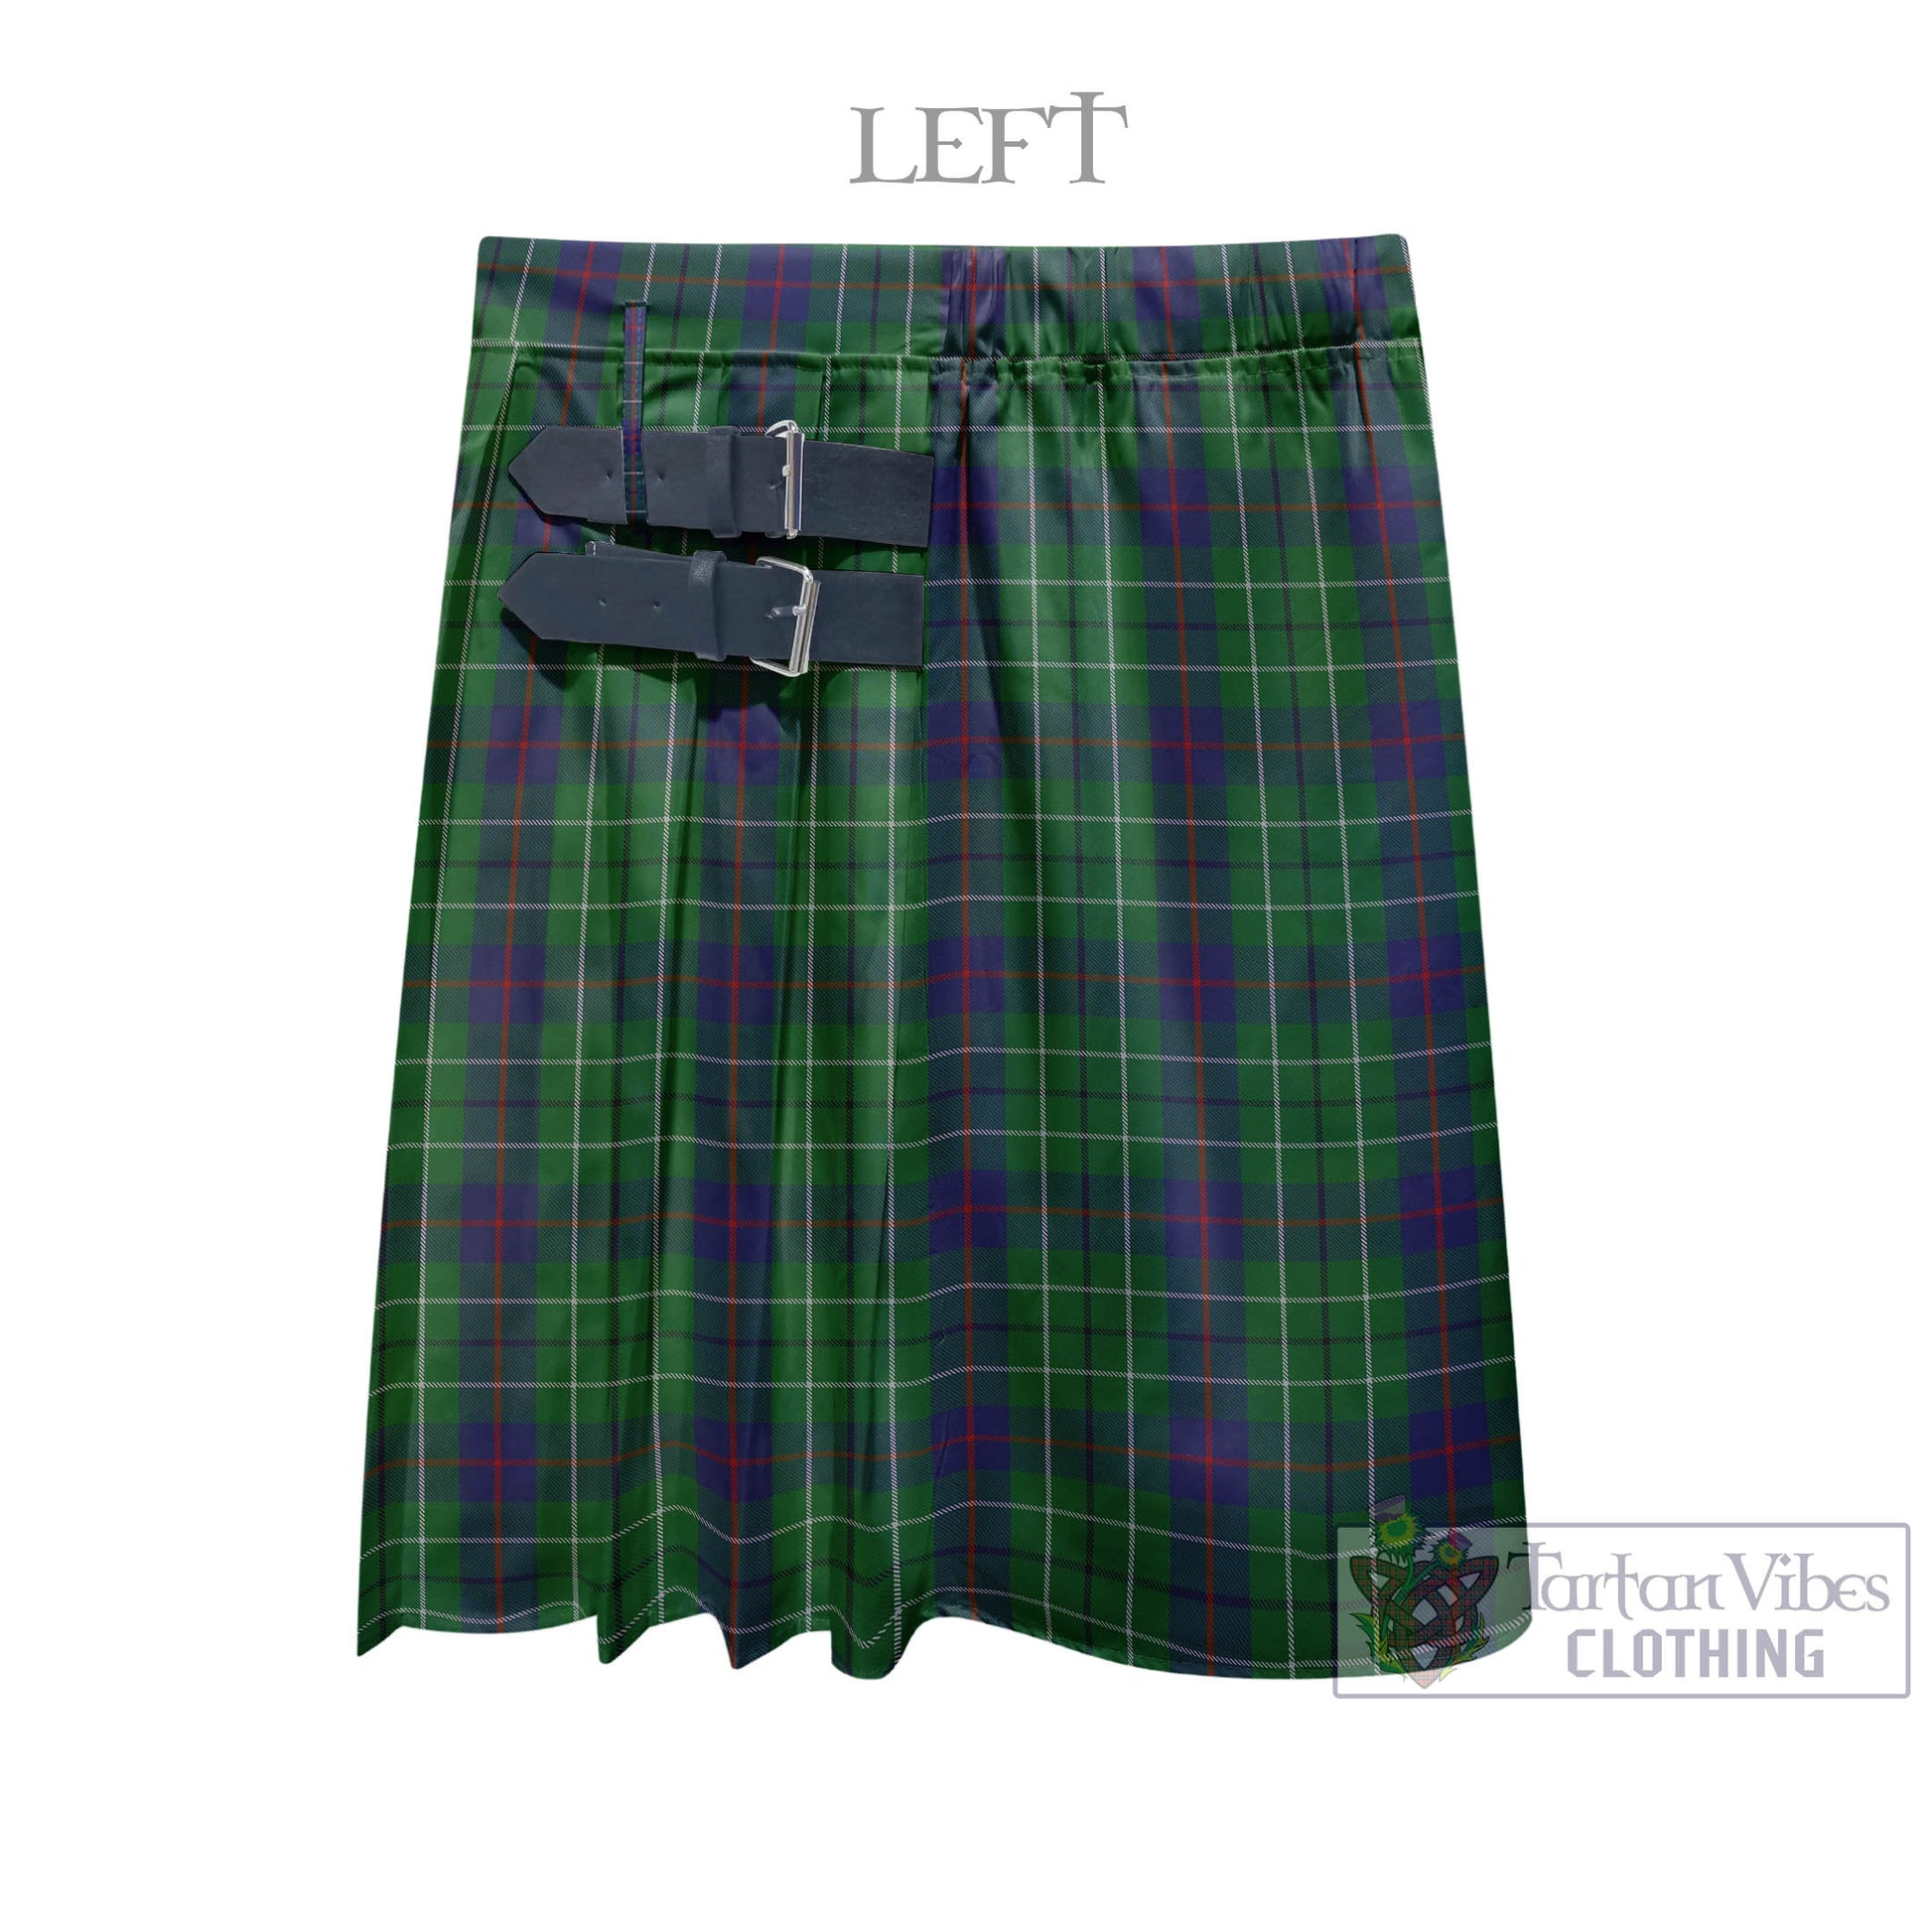 Tartan Vibes Clothing Duncan Tartan Men's Pleated Skirt - Fashion Casual Retro Scottish Style